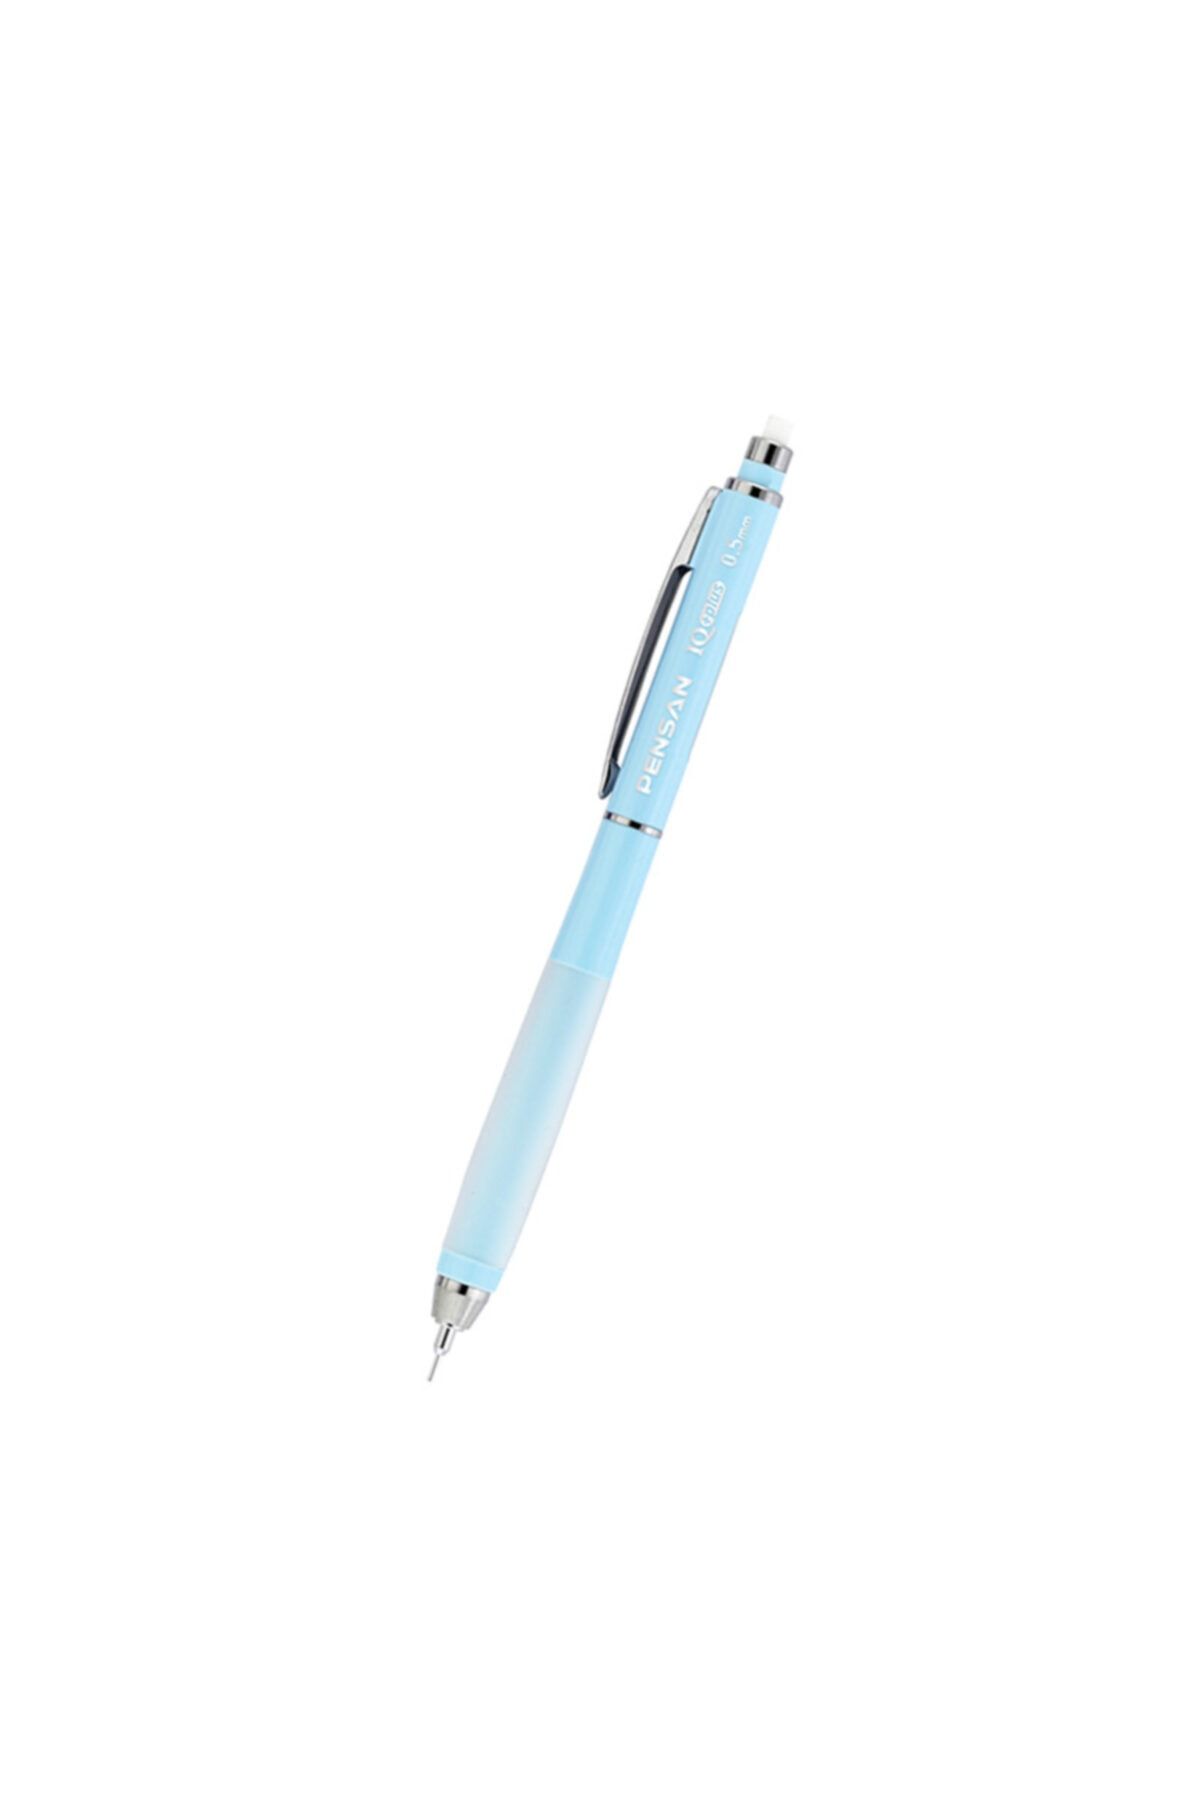 Pensan My-ıq Plus Versatil Kalem 0.5 Mm Karışık Renkler